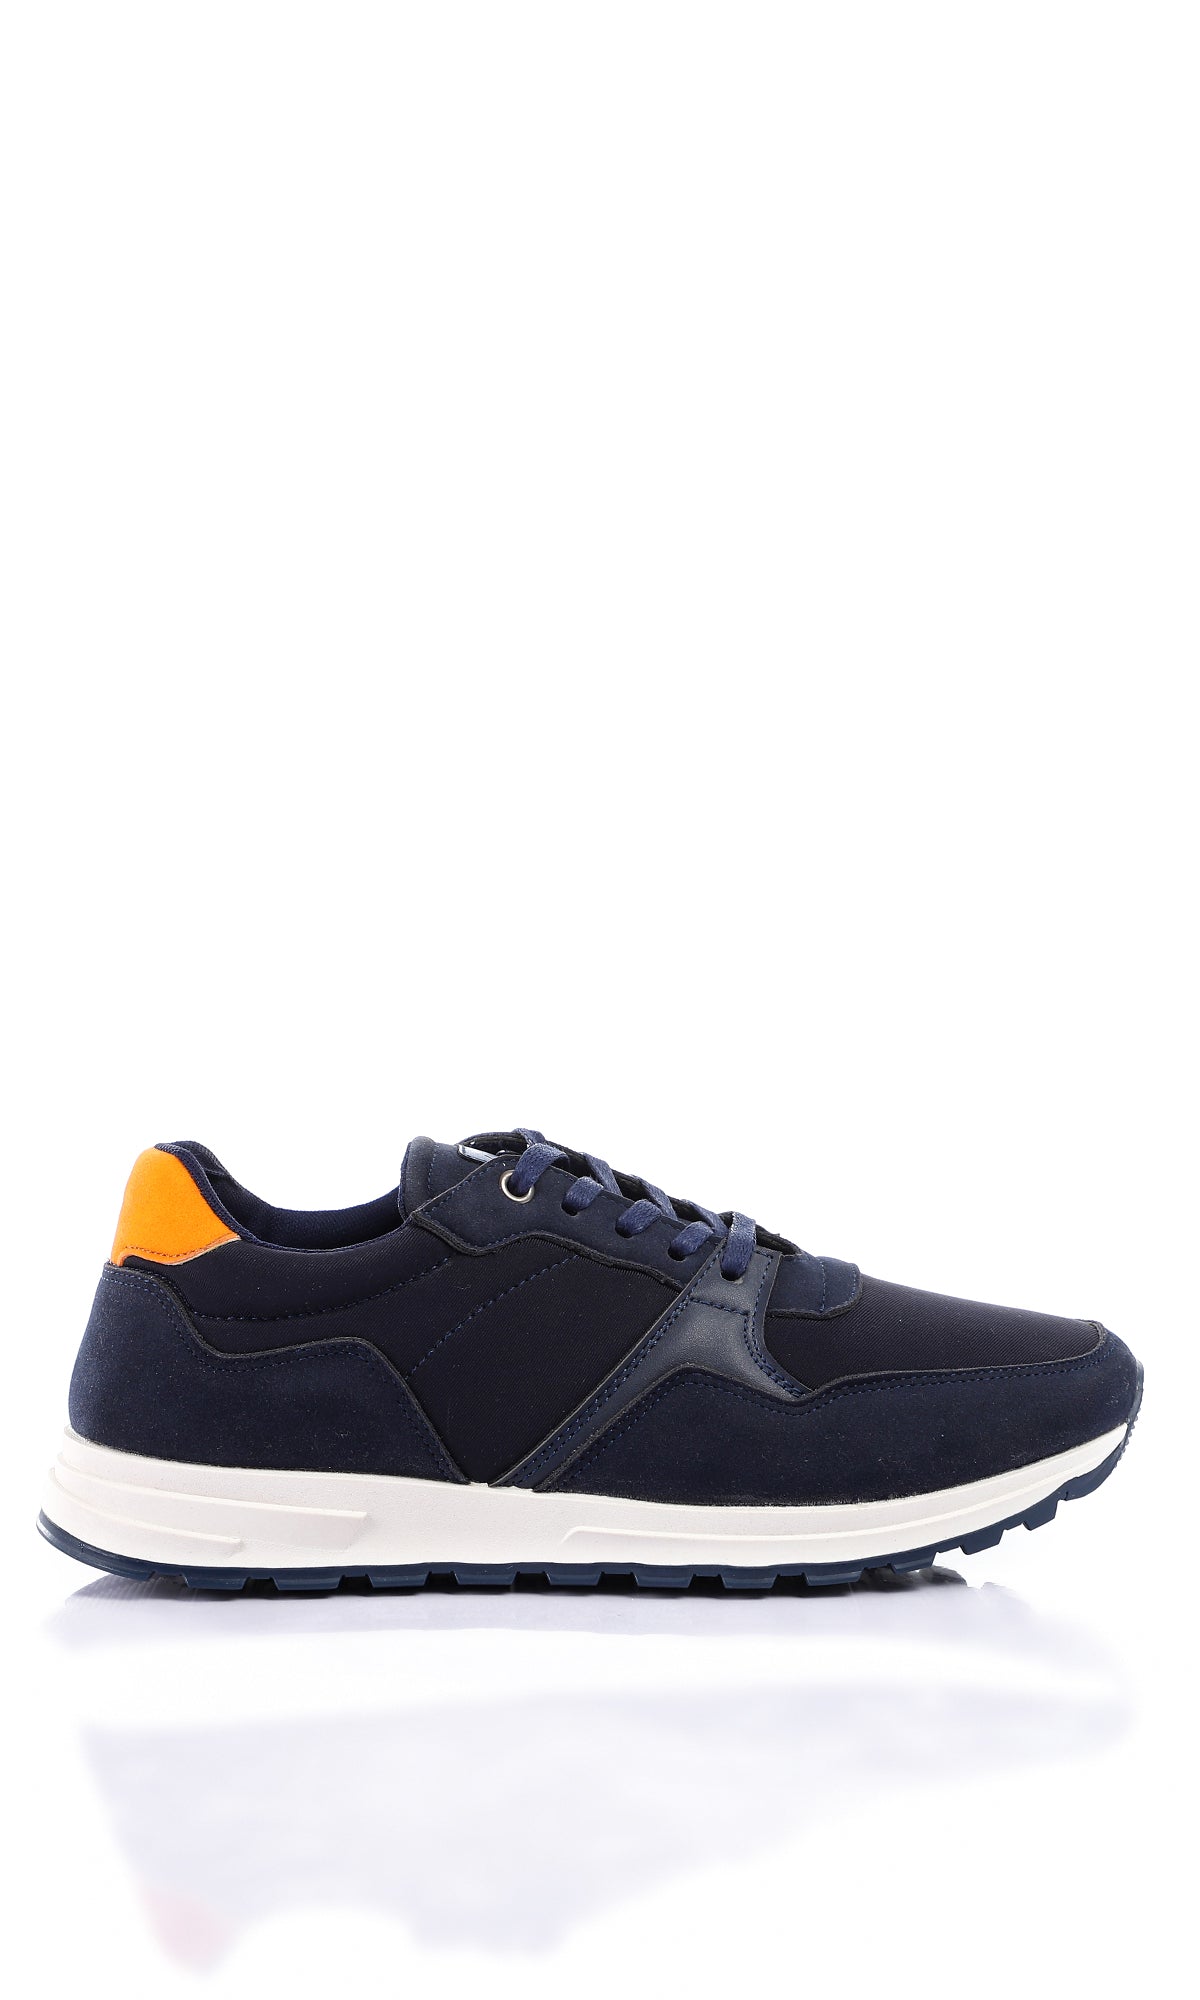 O160059 Fashionable Lace Up Casual Shoes - Navy Blue & Orange